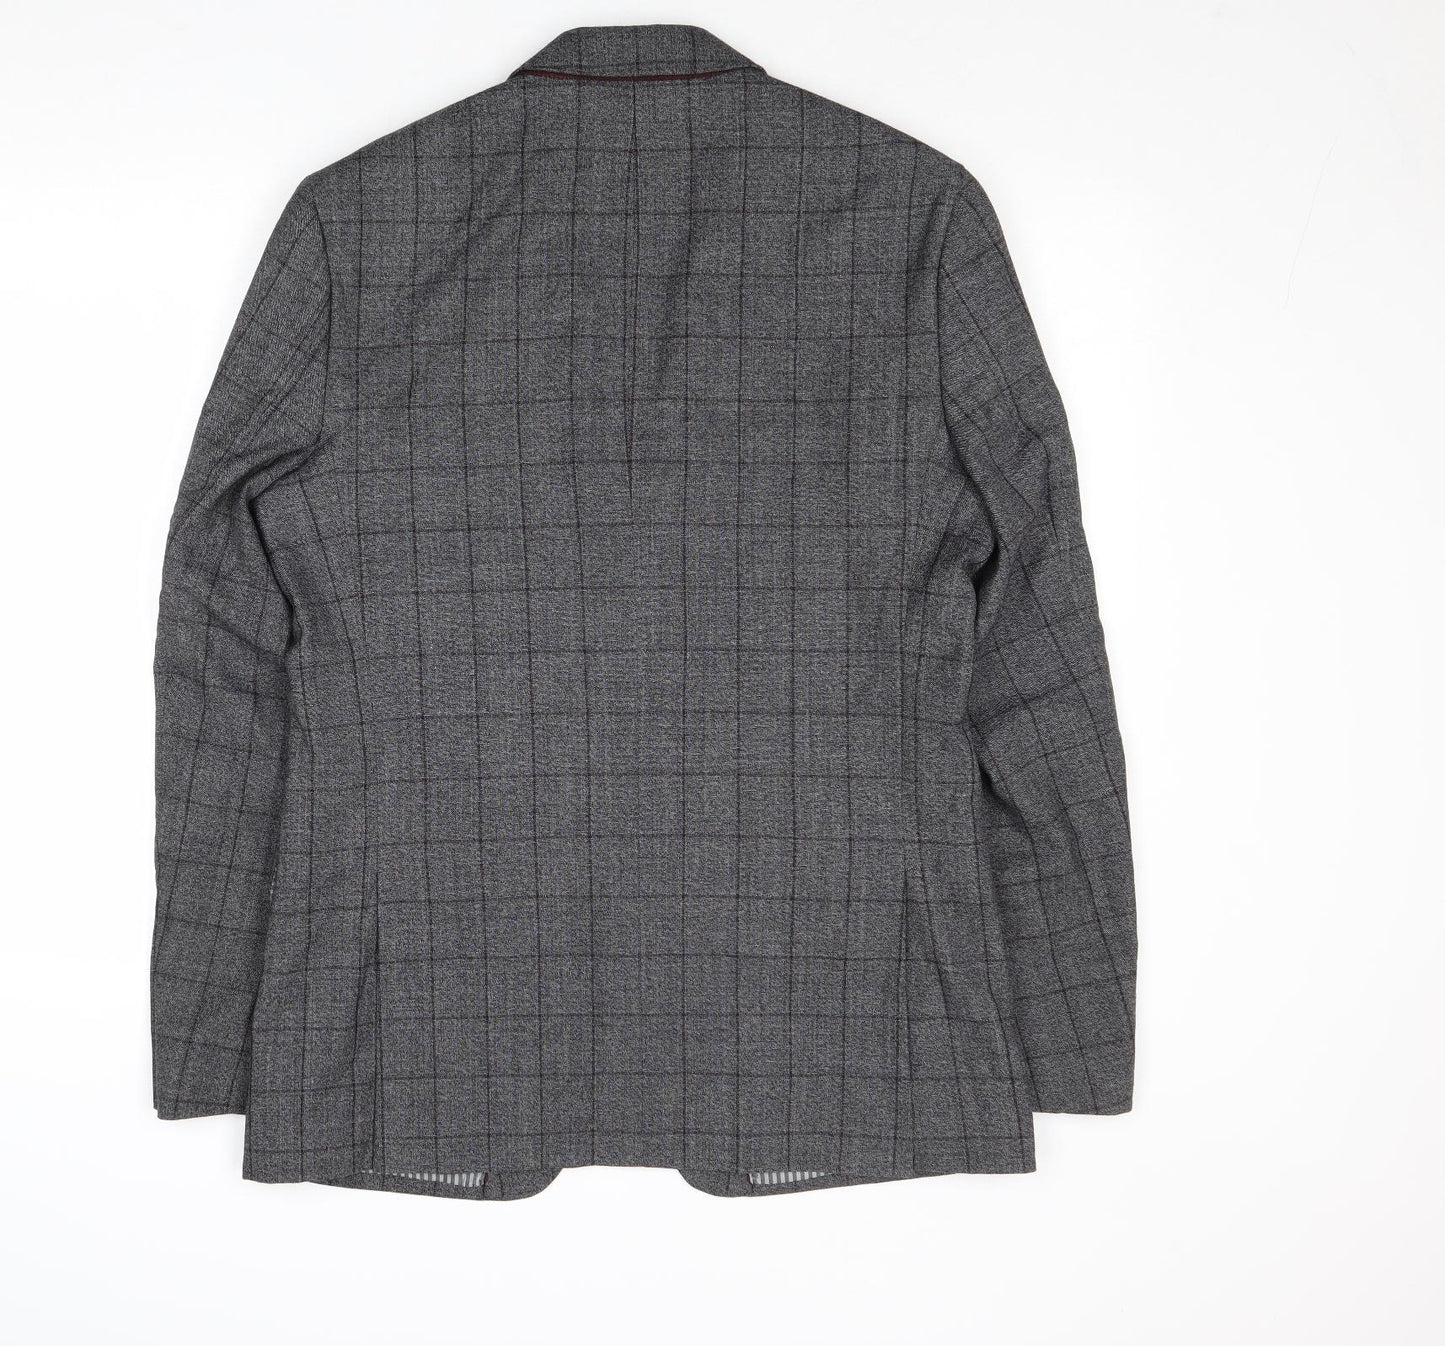 Jeff Banks Mens Grey Plaid Polyester Jacket Suit Jacket Size 40 Regular